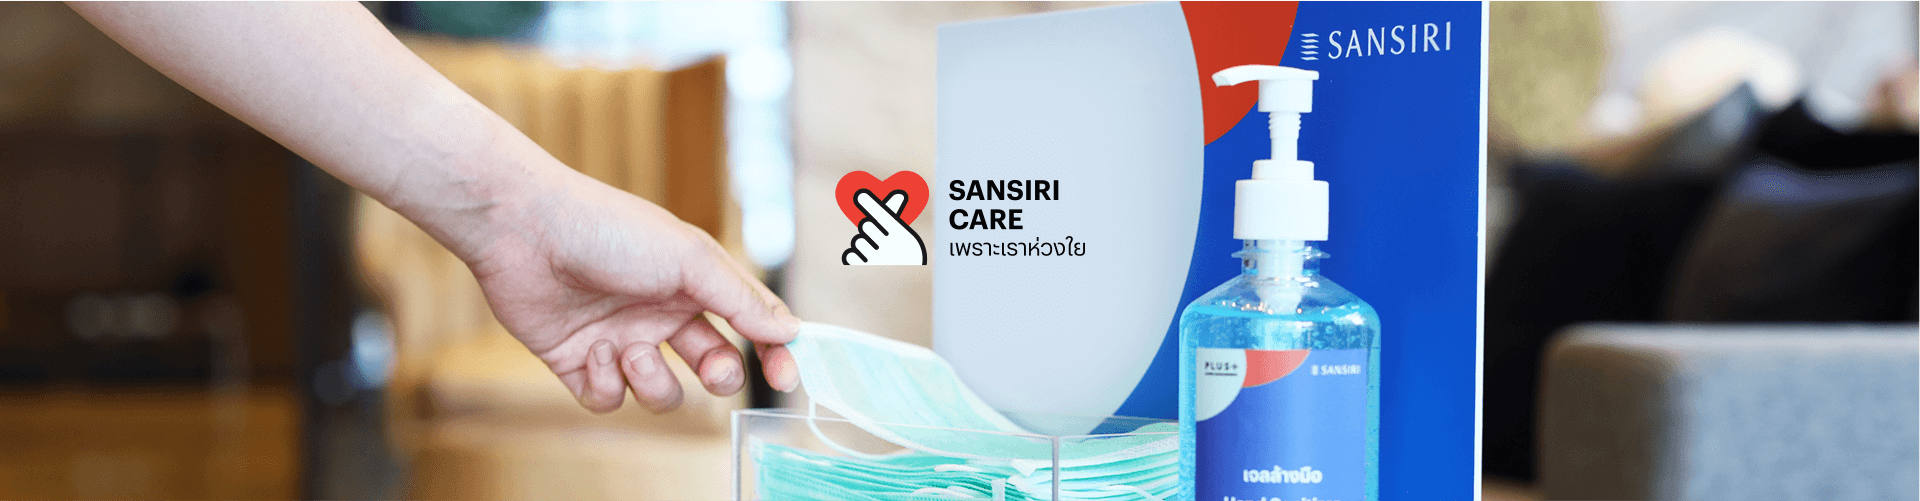 SANSIRI CARE เพราะเราห่วงใย